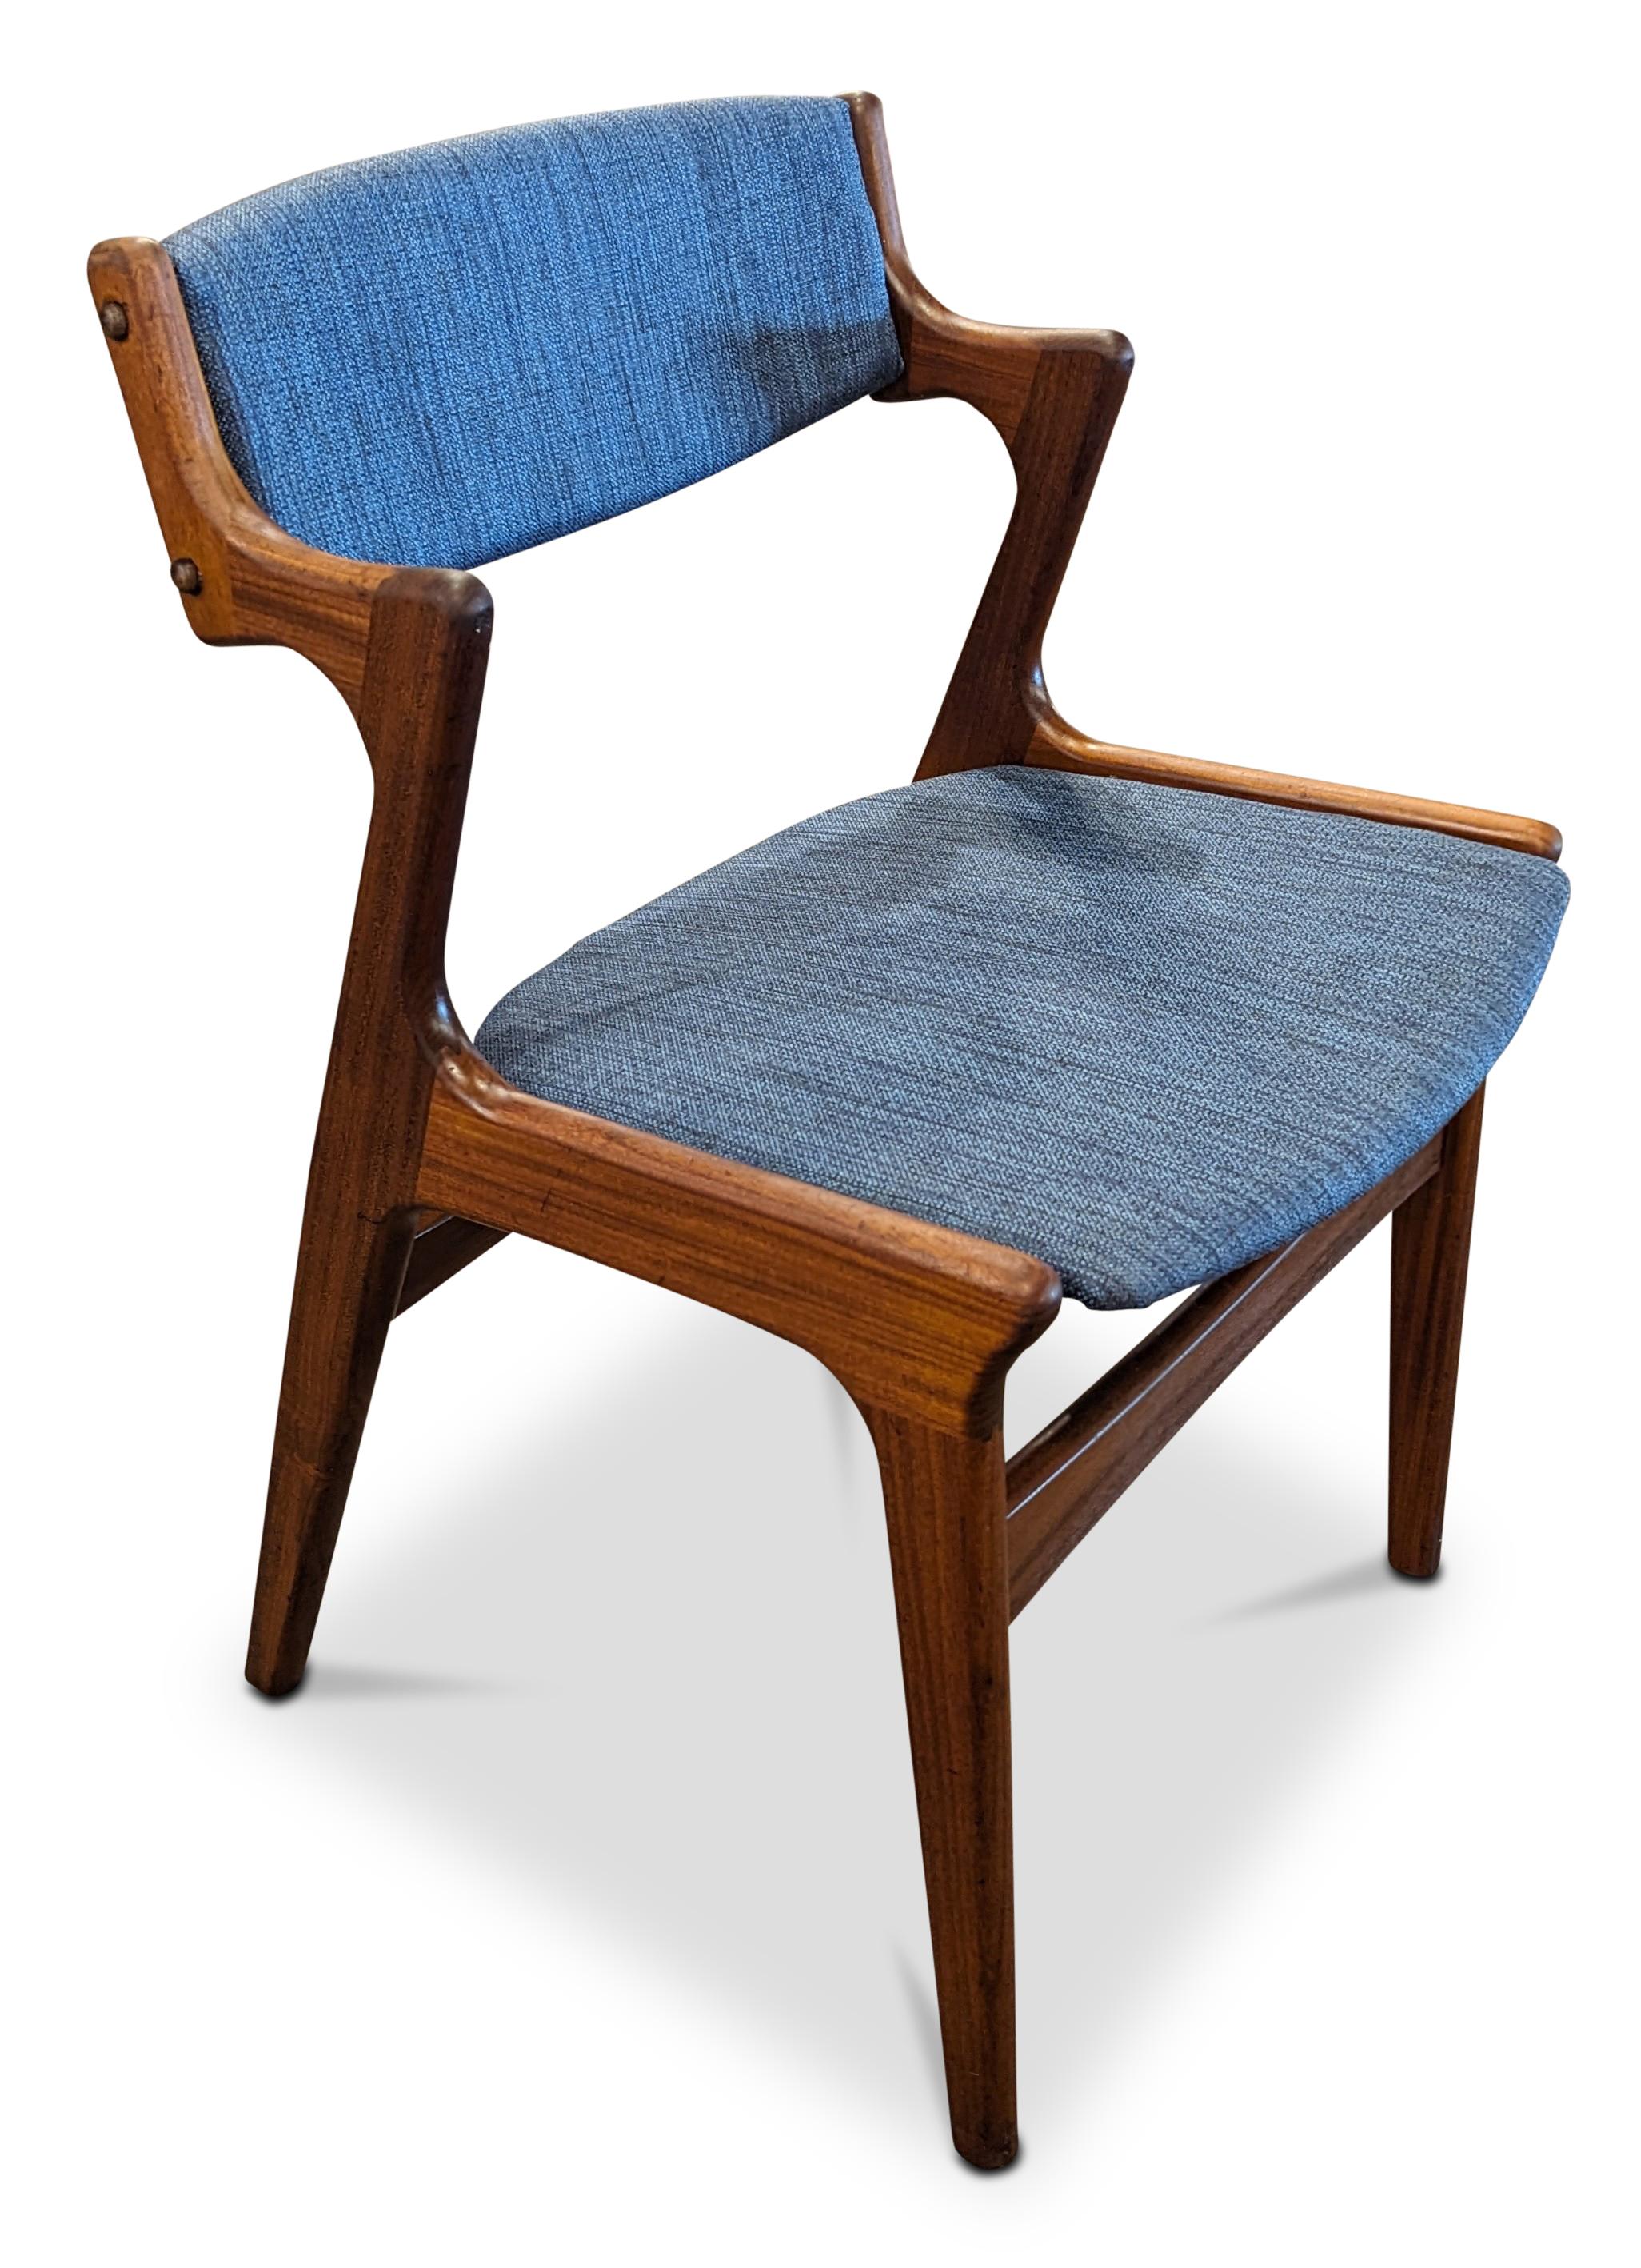 Mid-20th Century Vintage Danish Mid Century 4 Nova Teak Chairs - 072334